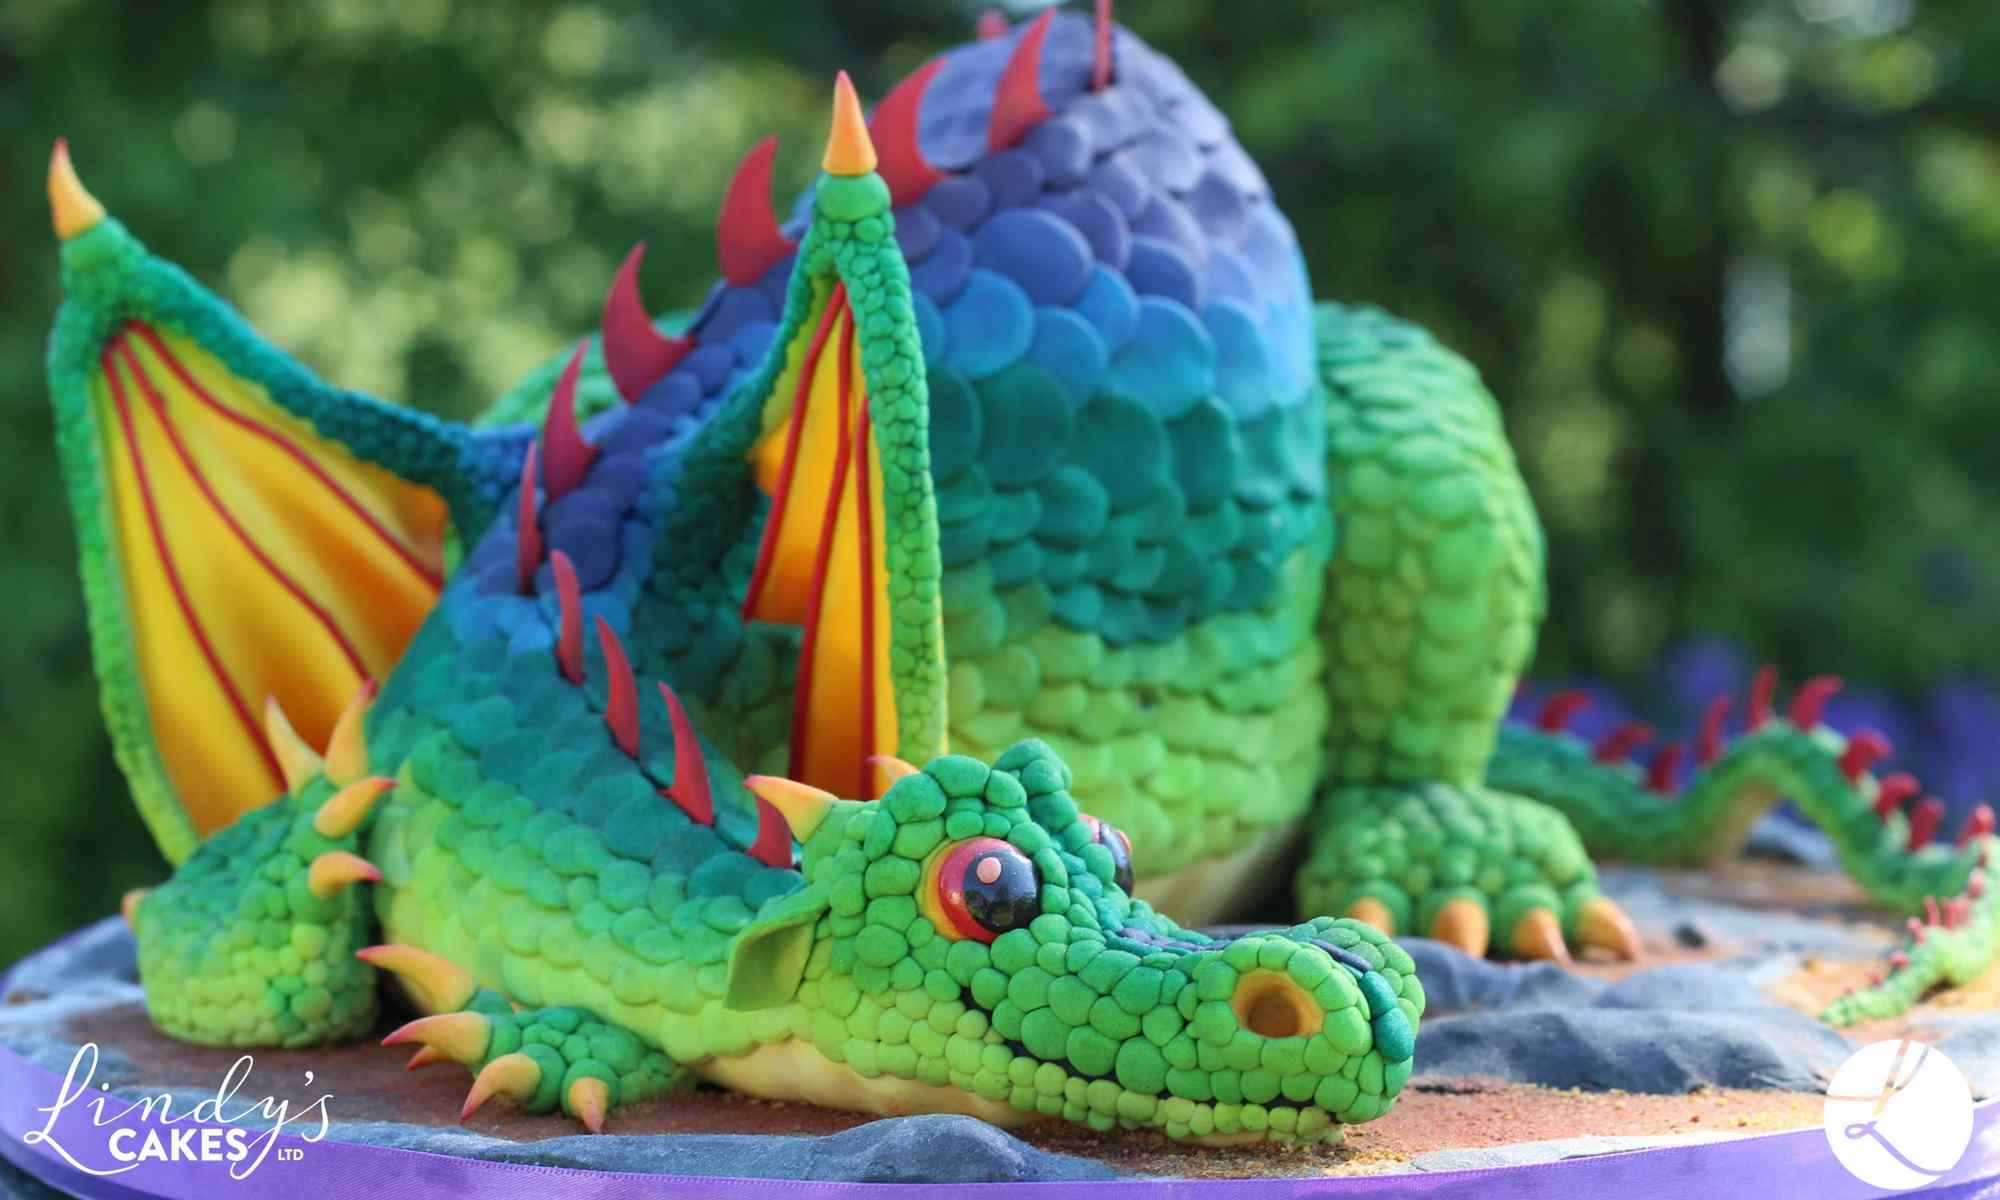 Award winning carved dragon cake by sugarcraft artist Lindy Smith